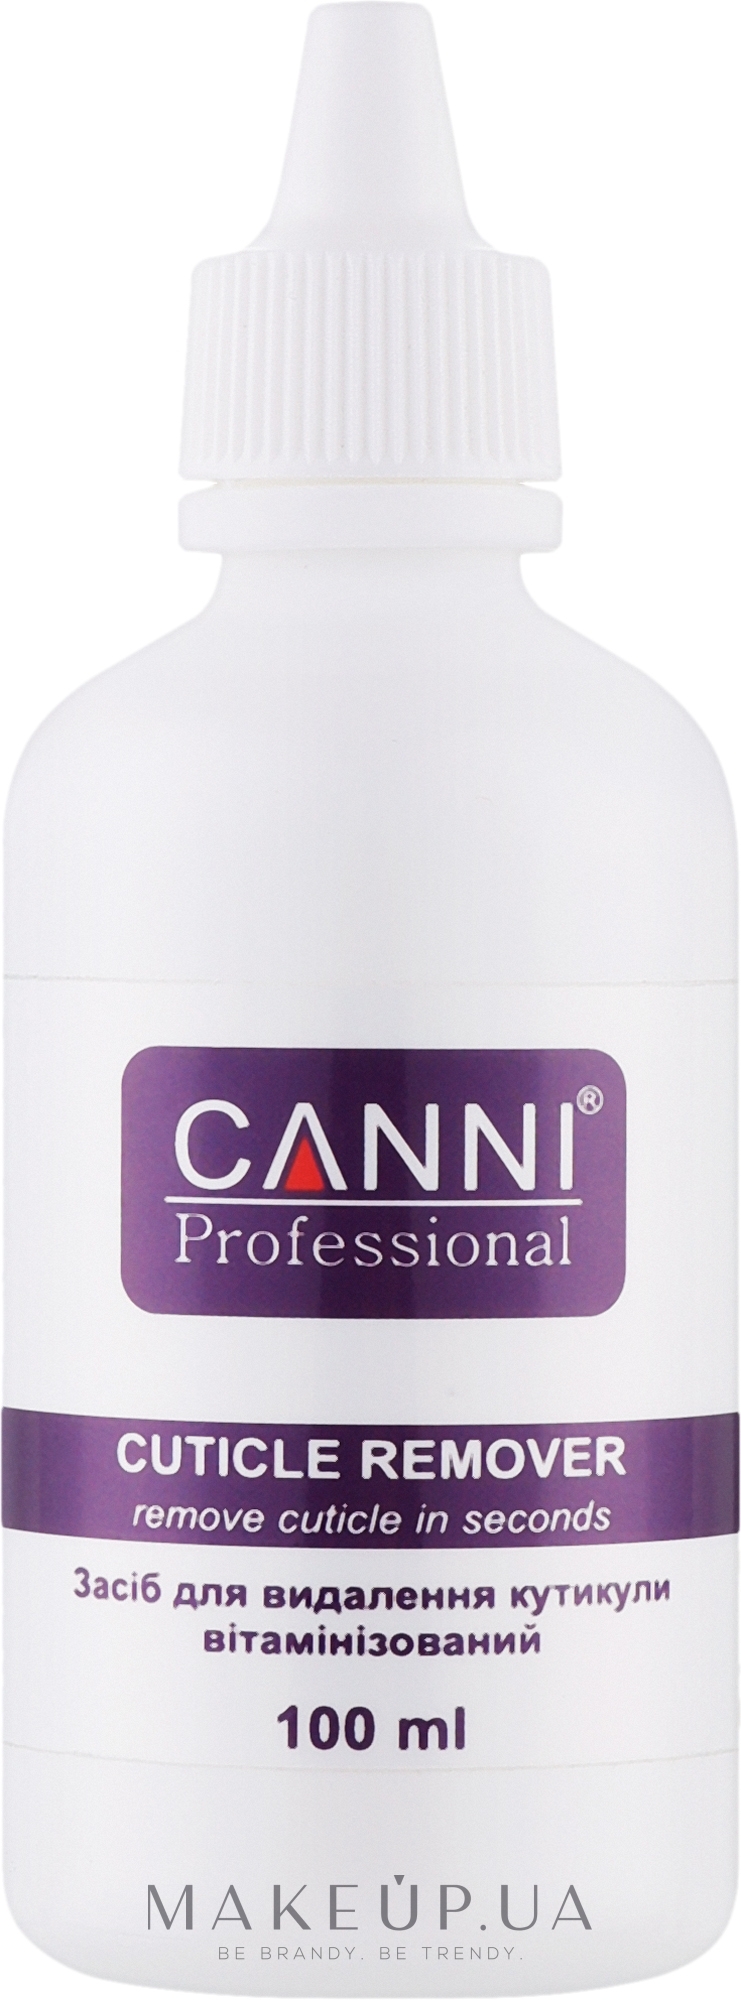 Ремувер для кутикулы витаминизированный - Canni Cuticle Remover — фото 100ml